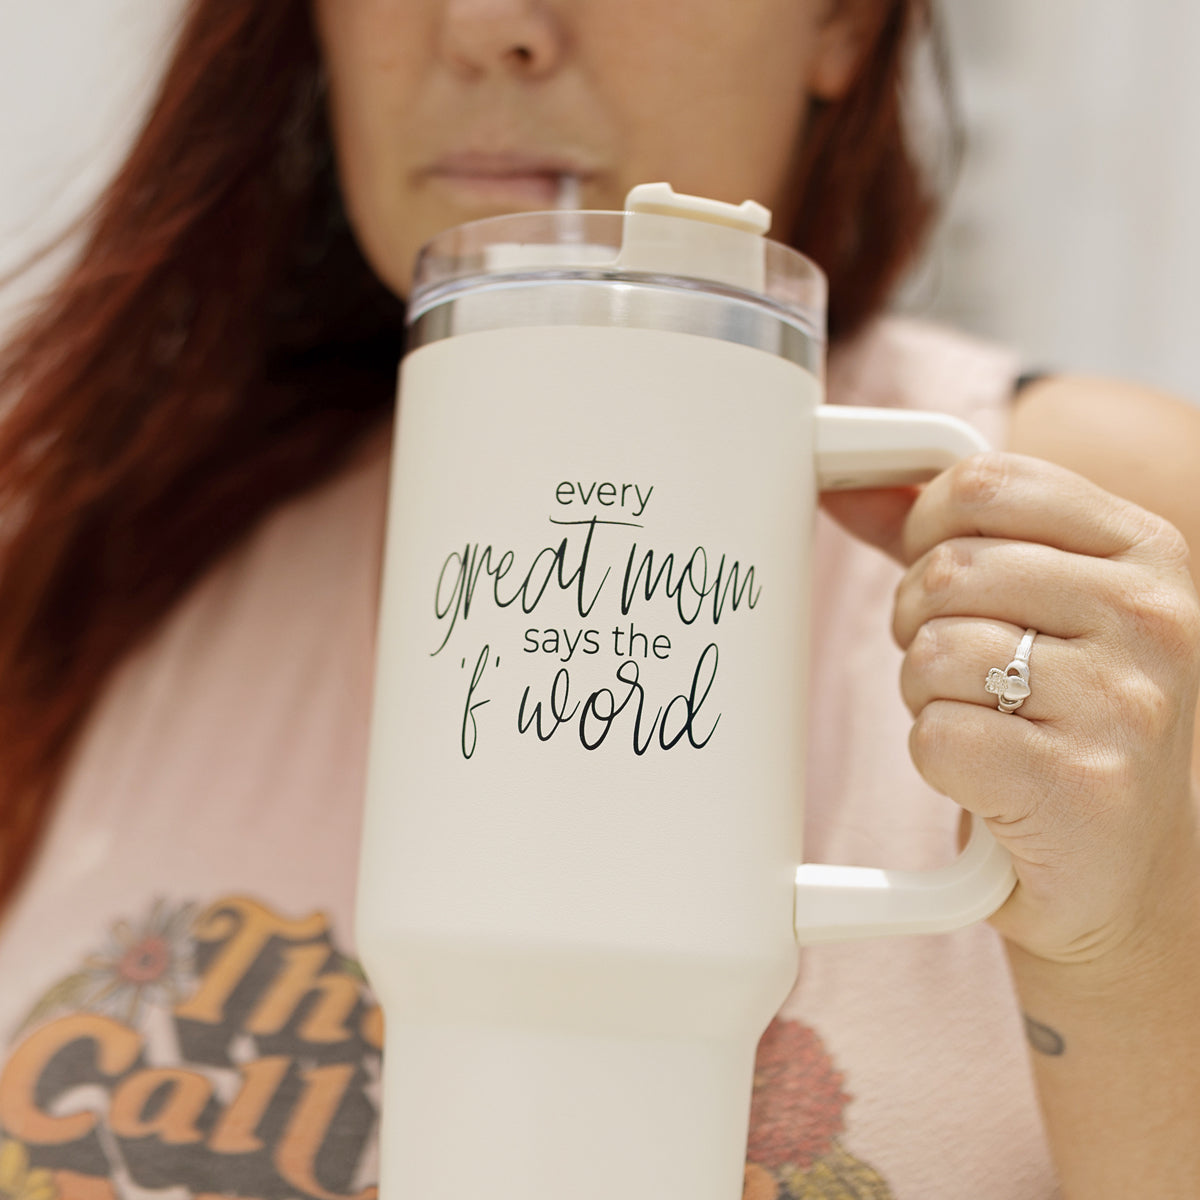 Funny Coffee mug quotes for moms, Mom Funny Jokes gift